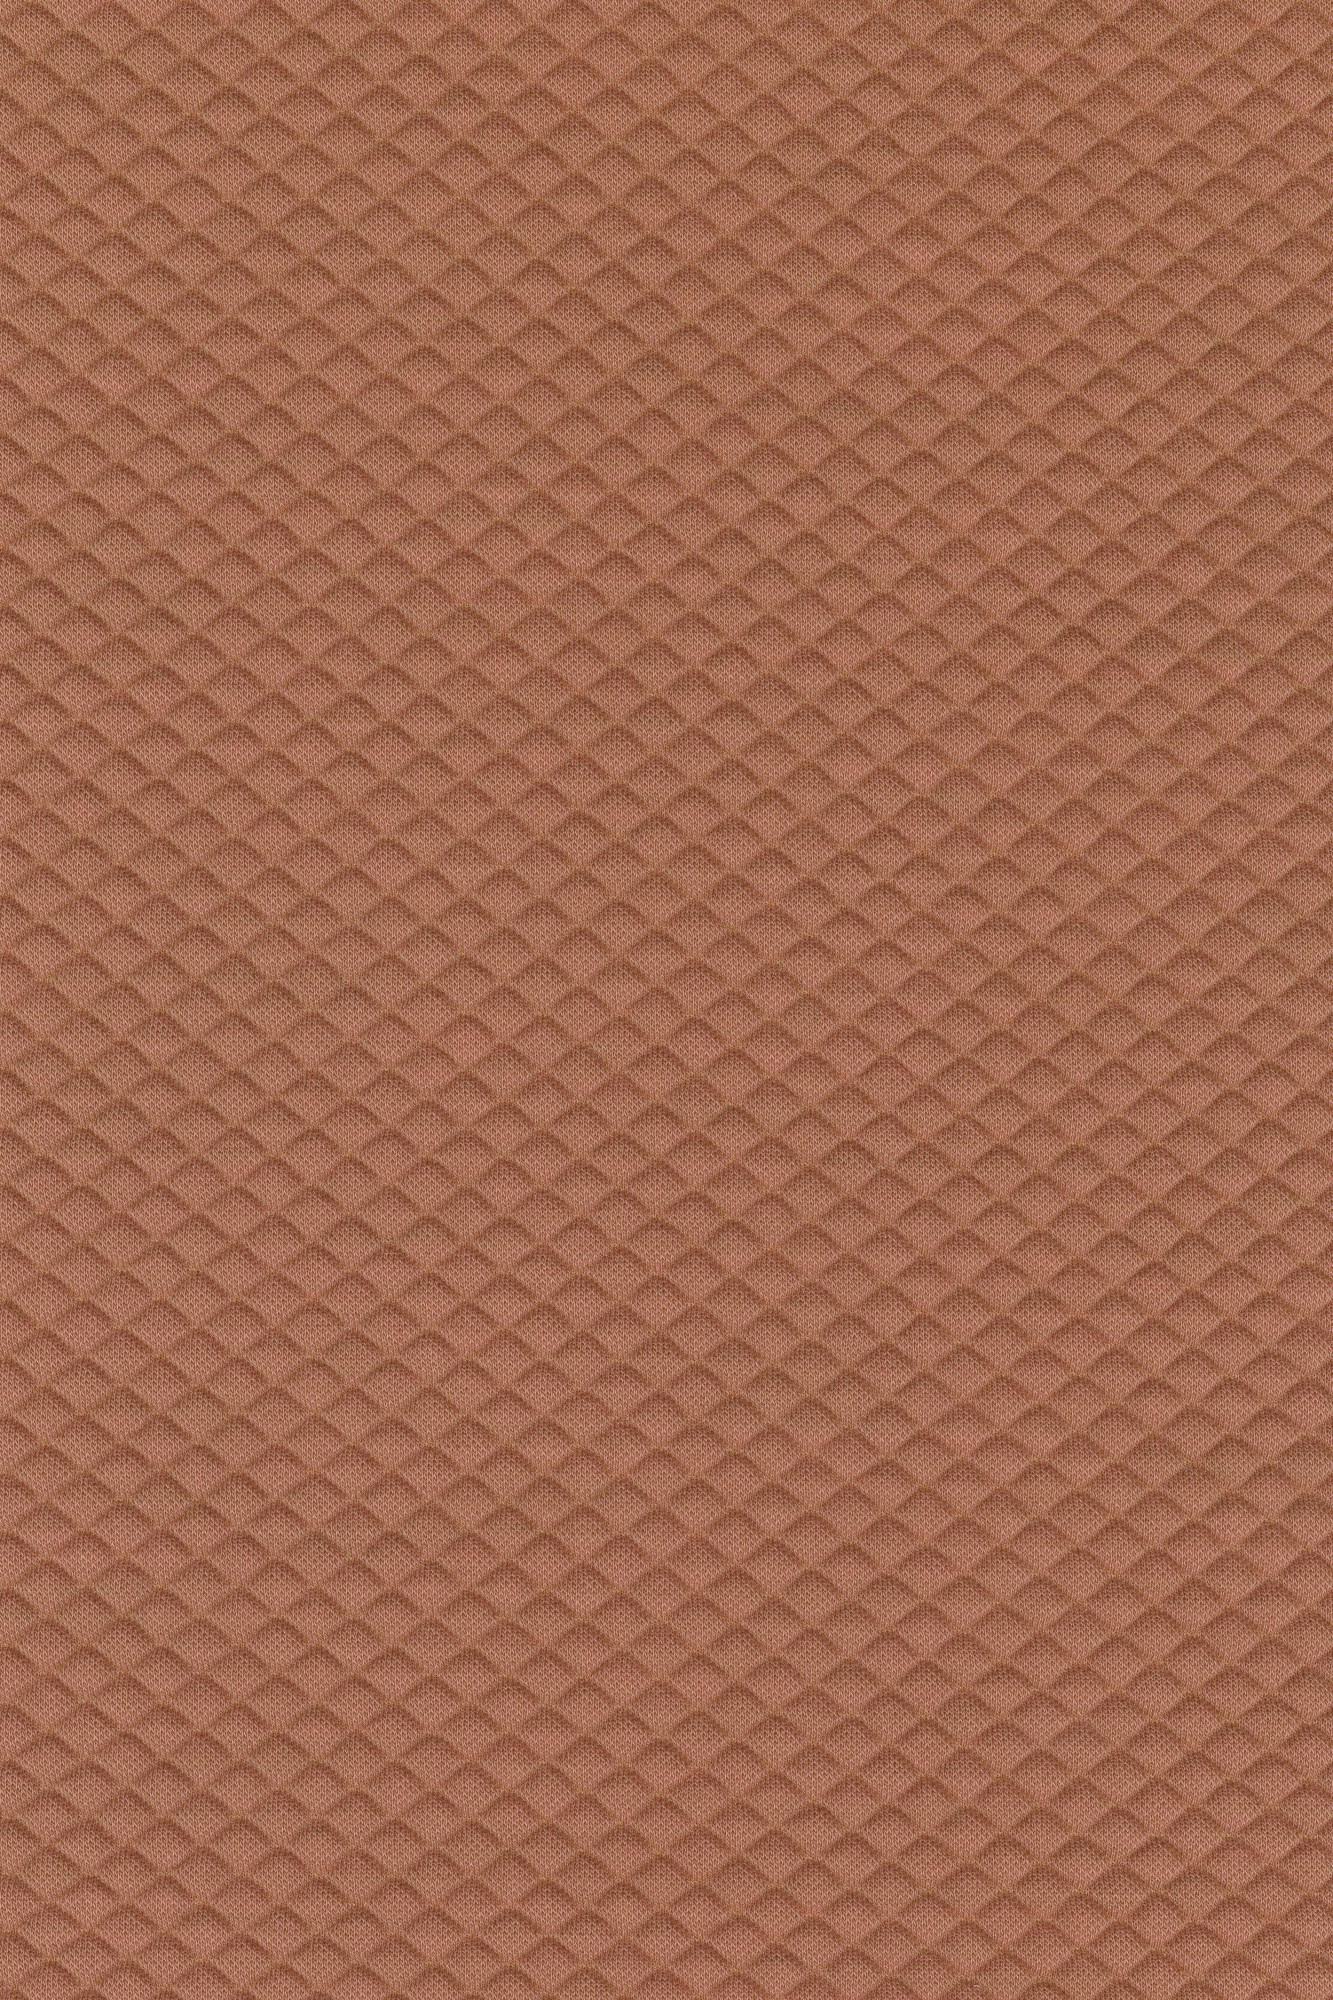 Fabric sample Mosaic 2 0532 pink